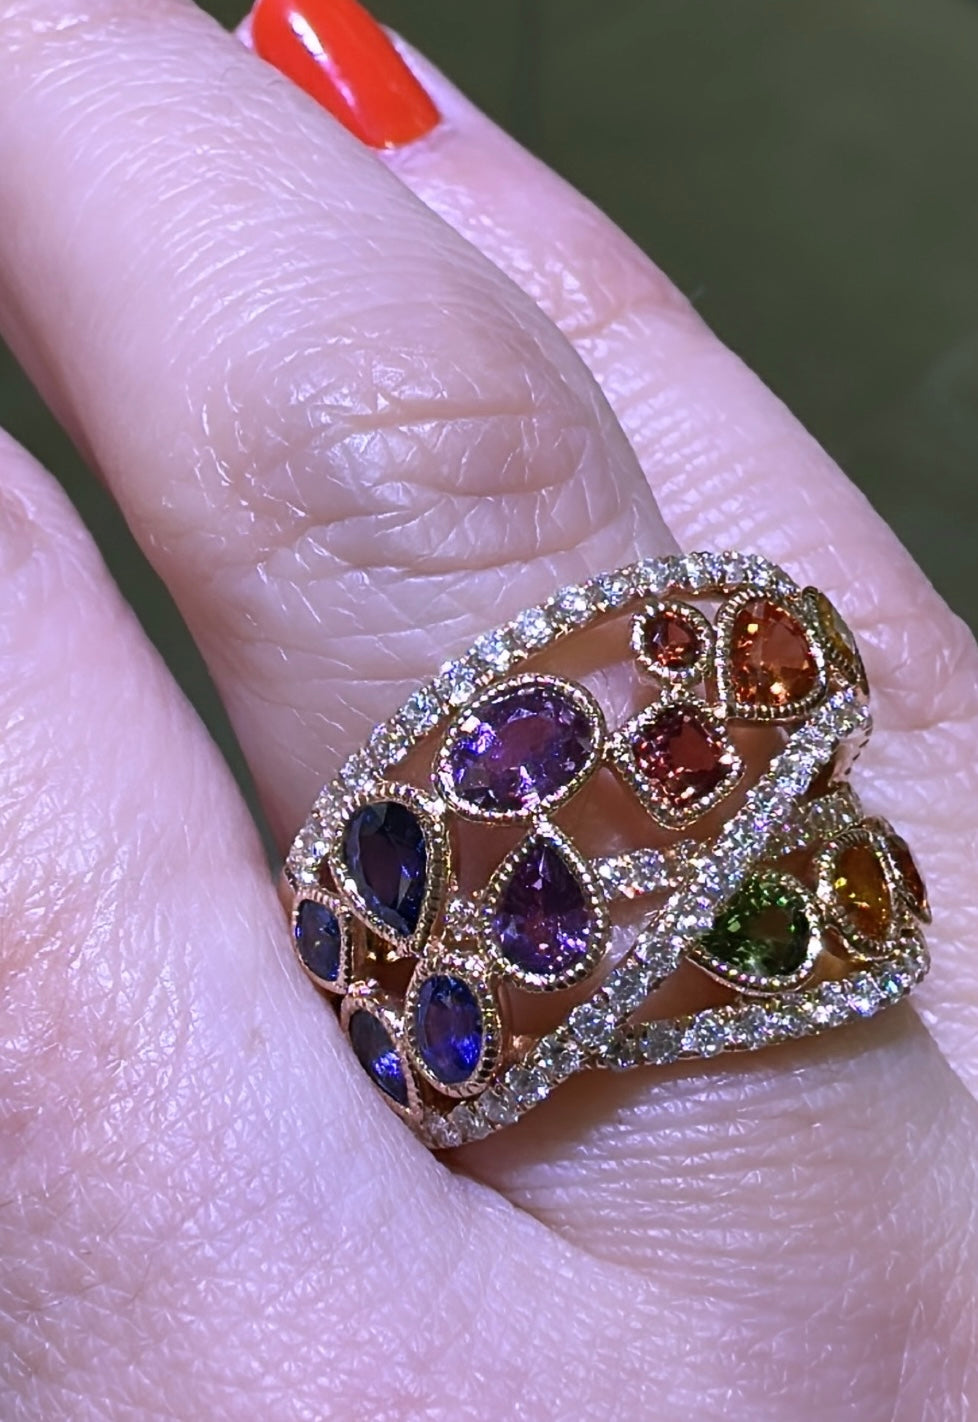 Multiple-shape Rainbow Sapphire Rose Gold Ring